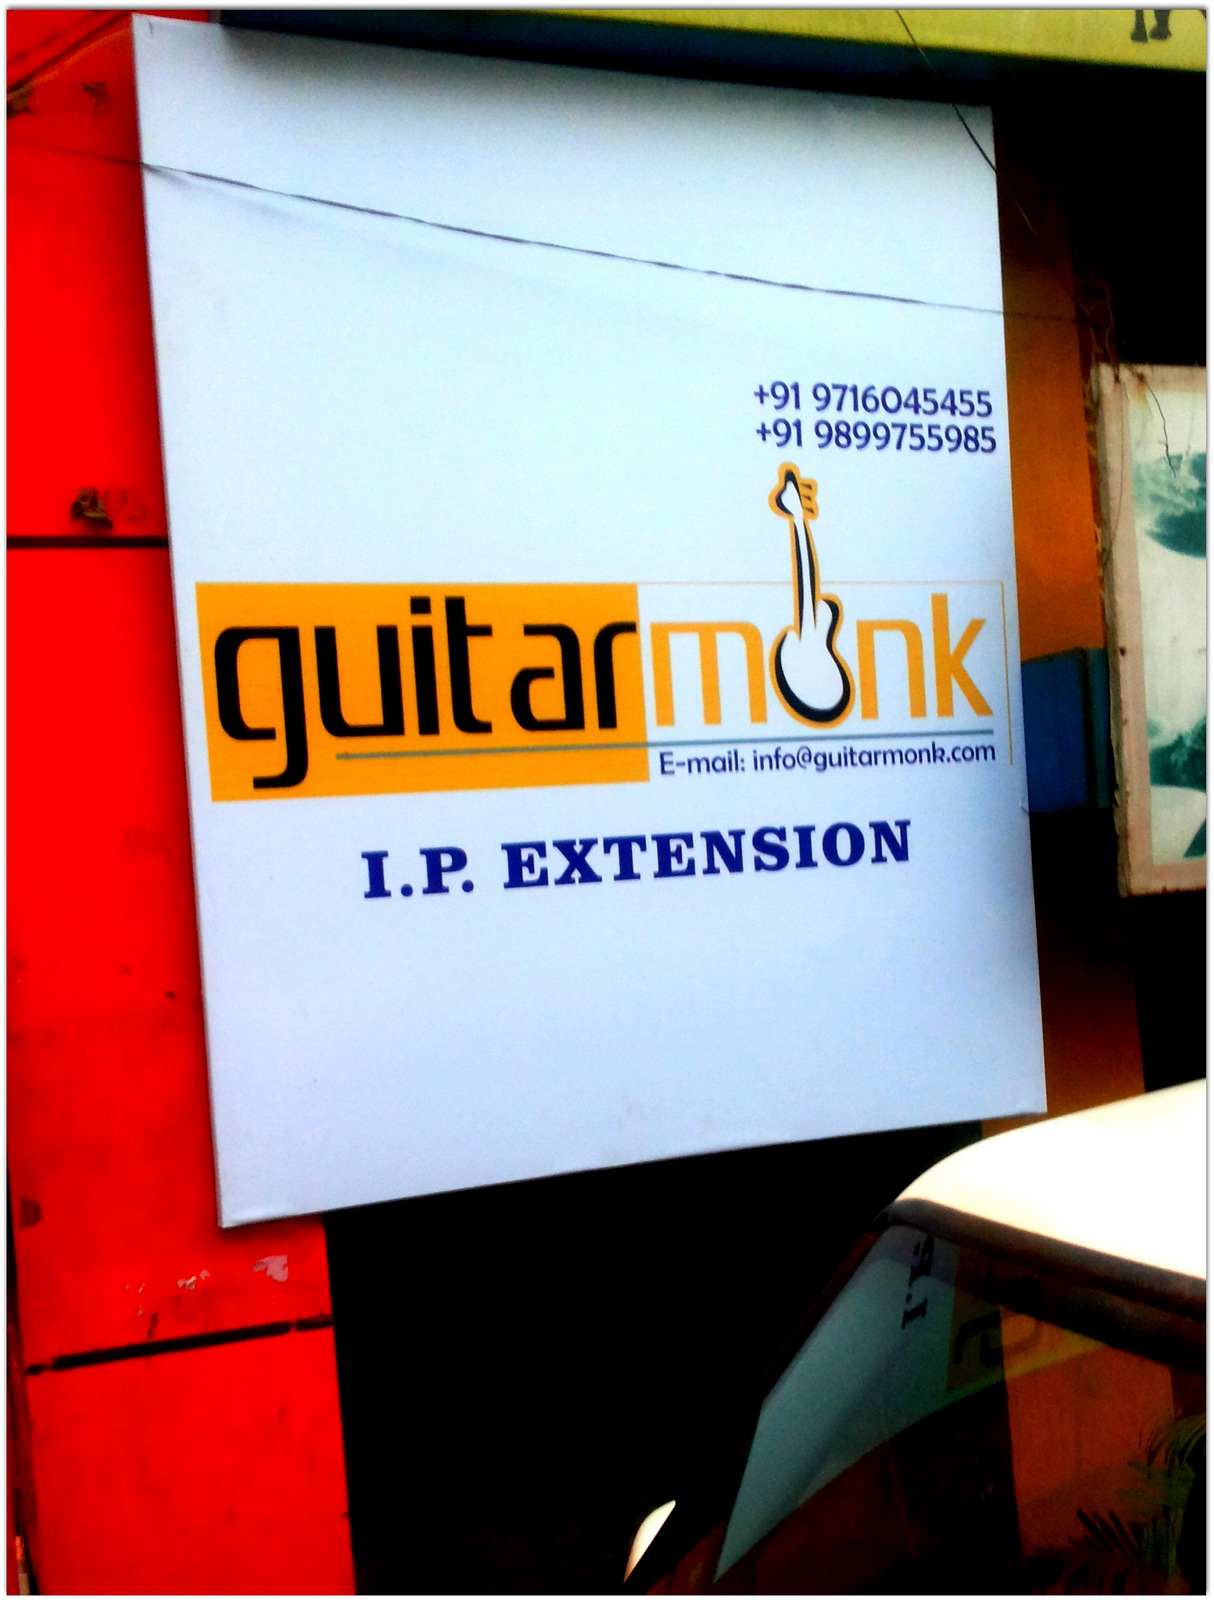 Guitarmonk Patparganj IP Extension East Delhi